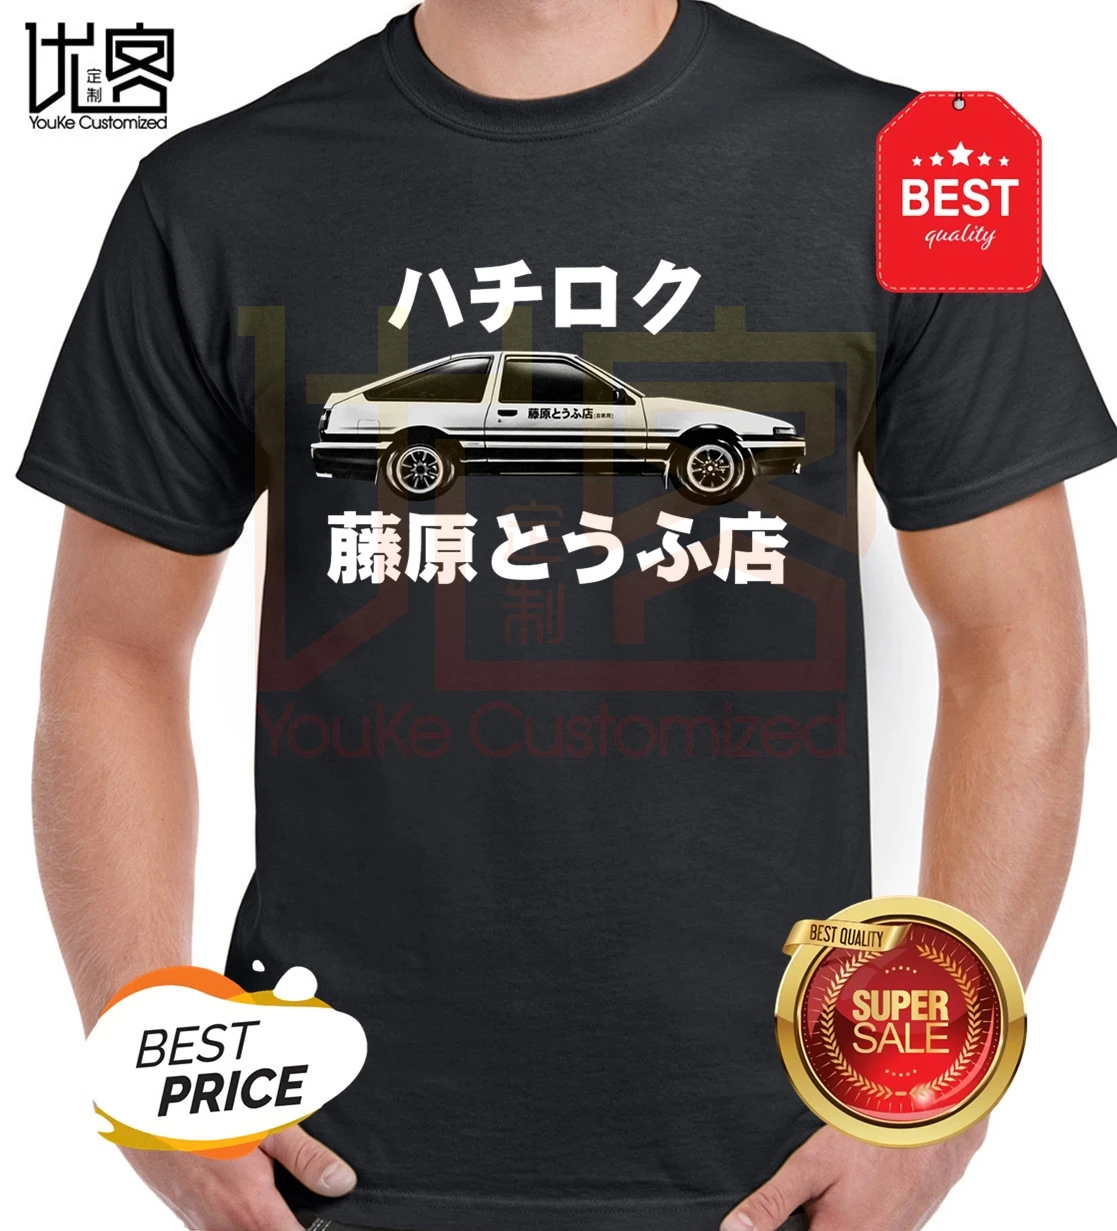 

2020 Fashion Printed Round Men Tshirt Initial D Shirt Ae86 T-Shirt Trueno Jdm Hachiroku Drift Corolla Sprinter Tee Shirt